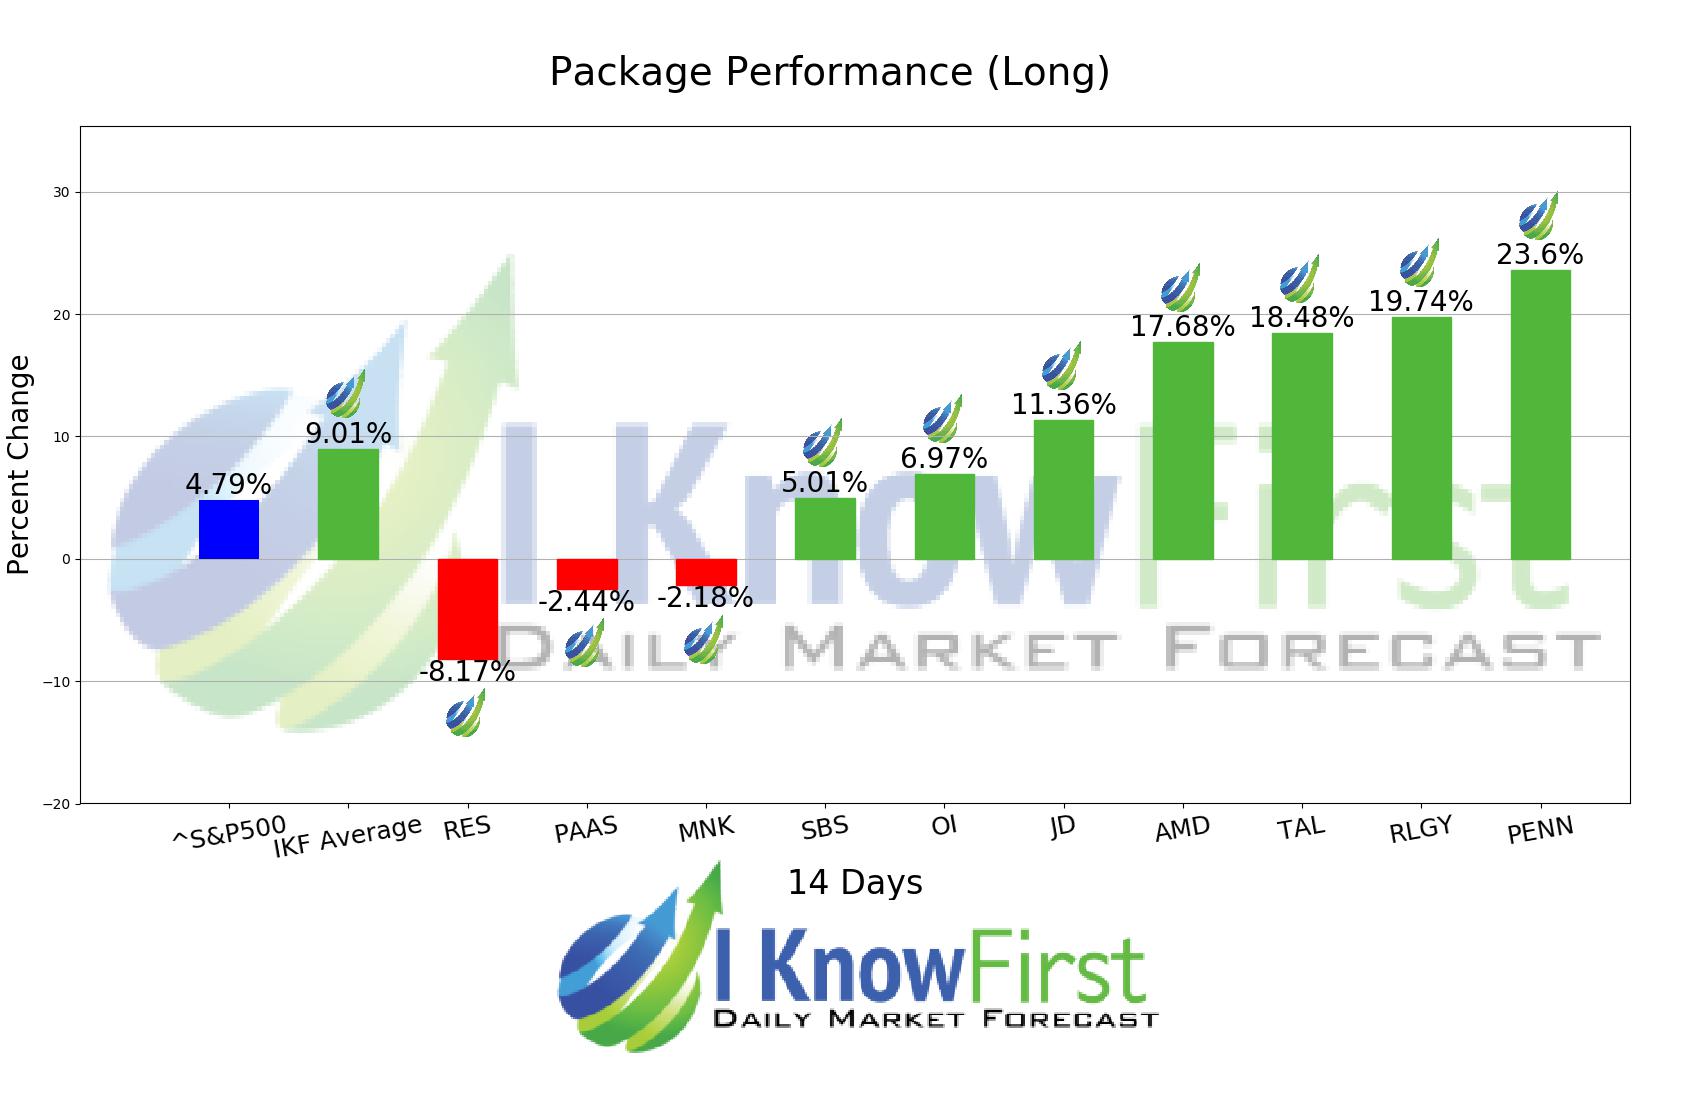 High Volume Low Price Stocks chart